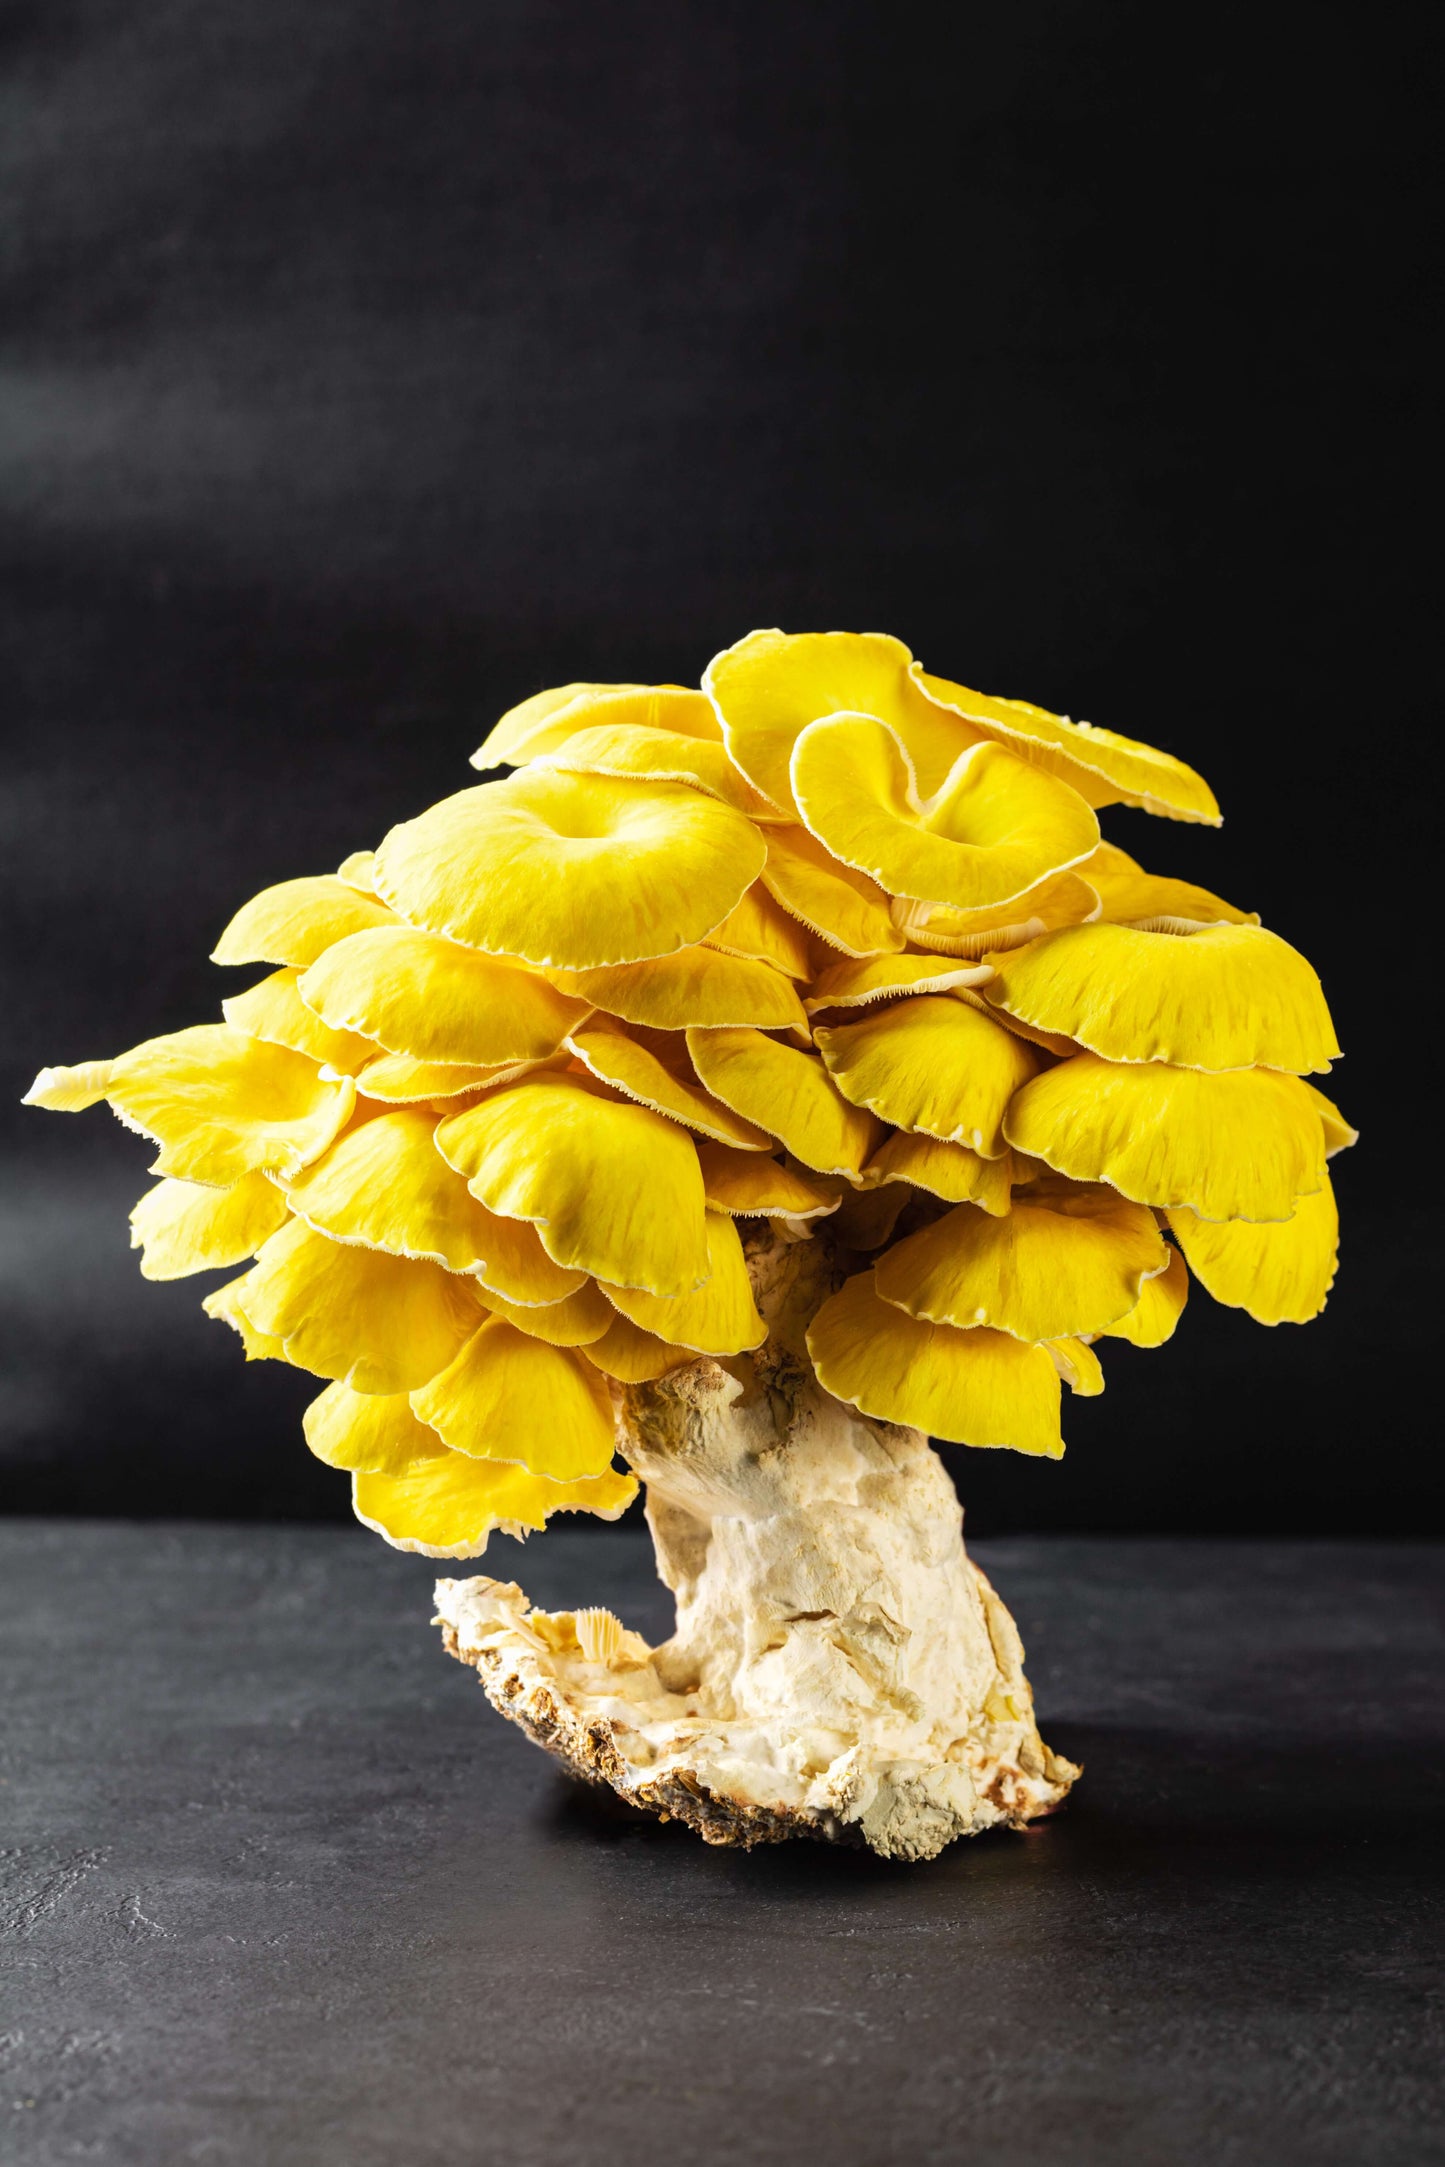 Golden Oyster Grow-At-Home Mushroom Kit